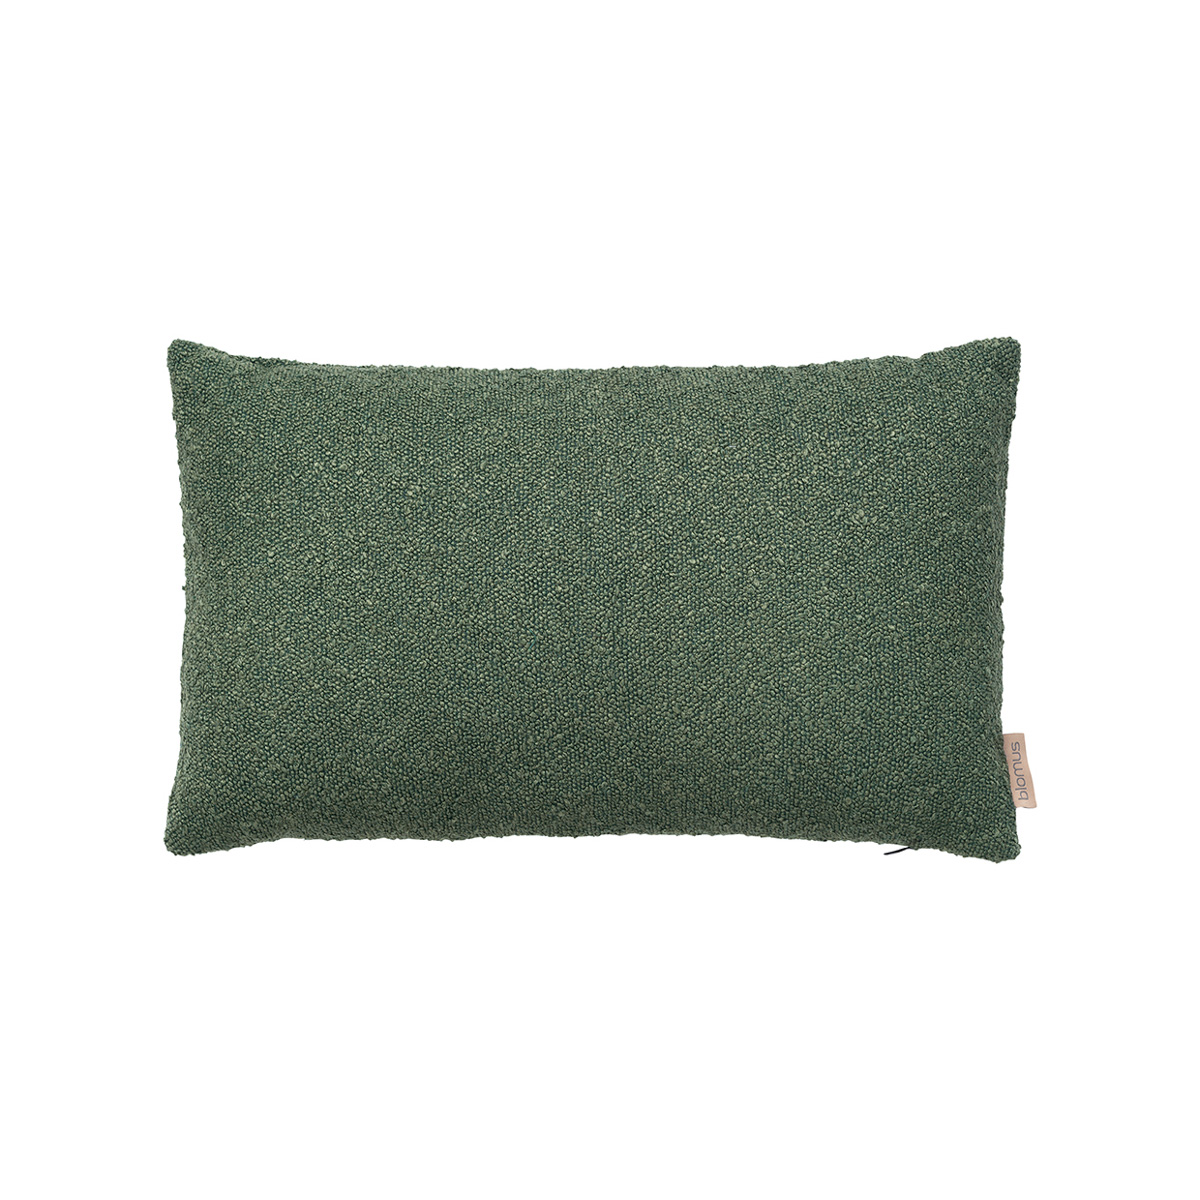 Kissenbezug -BOUCLE- Duck Green 30 x 50 cm. Material: 90% Polyester, 10% Acryl. Von Blomus.